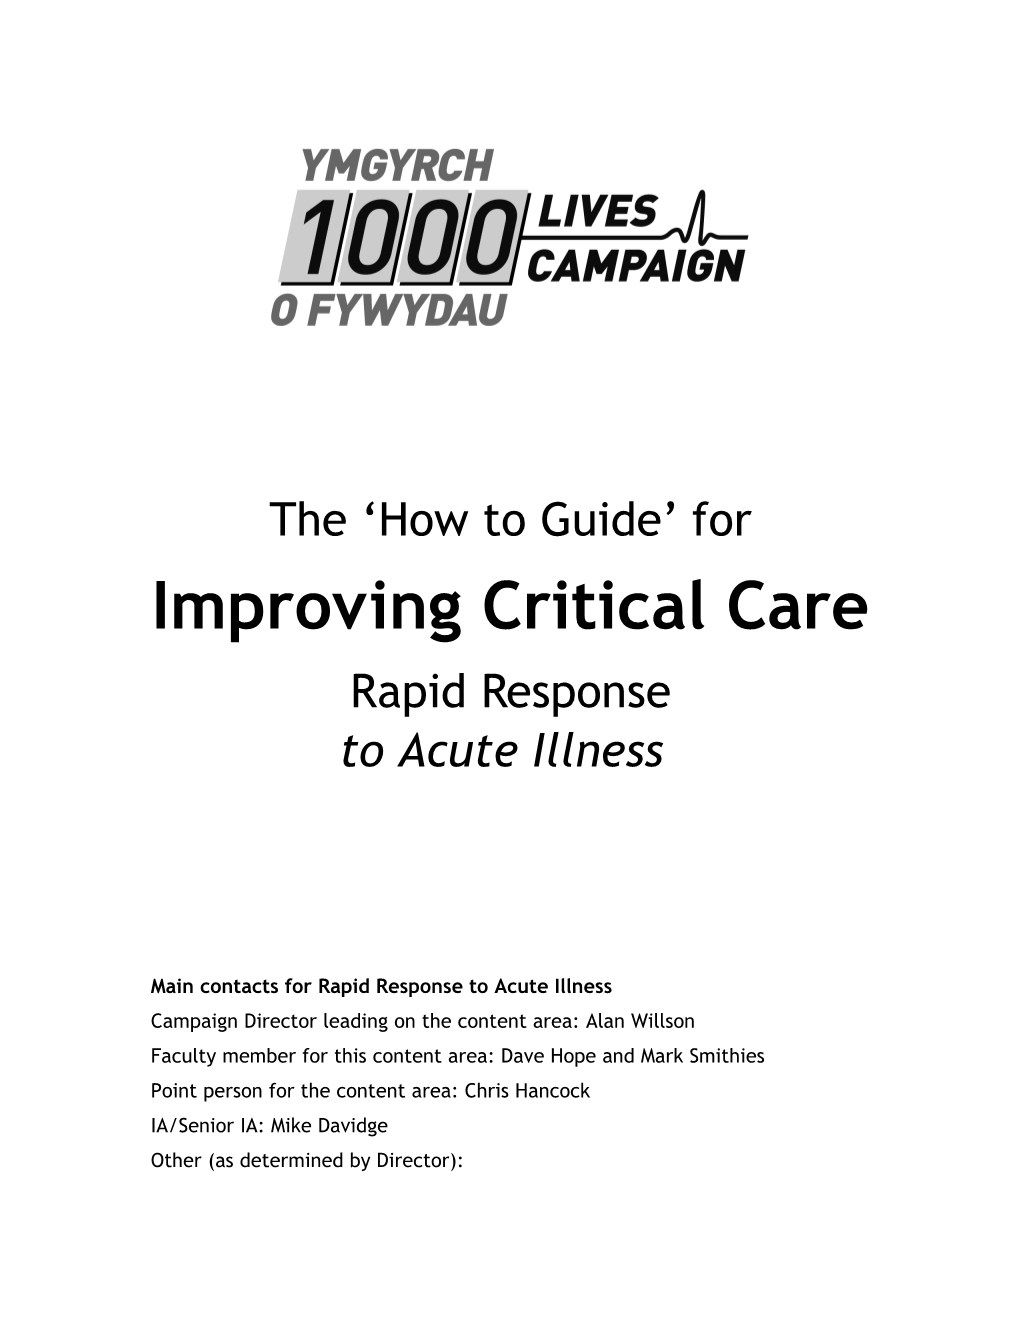 Improve Critical Care